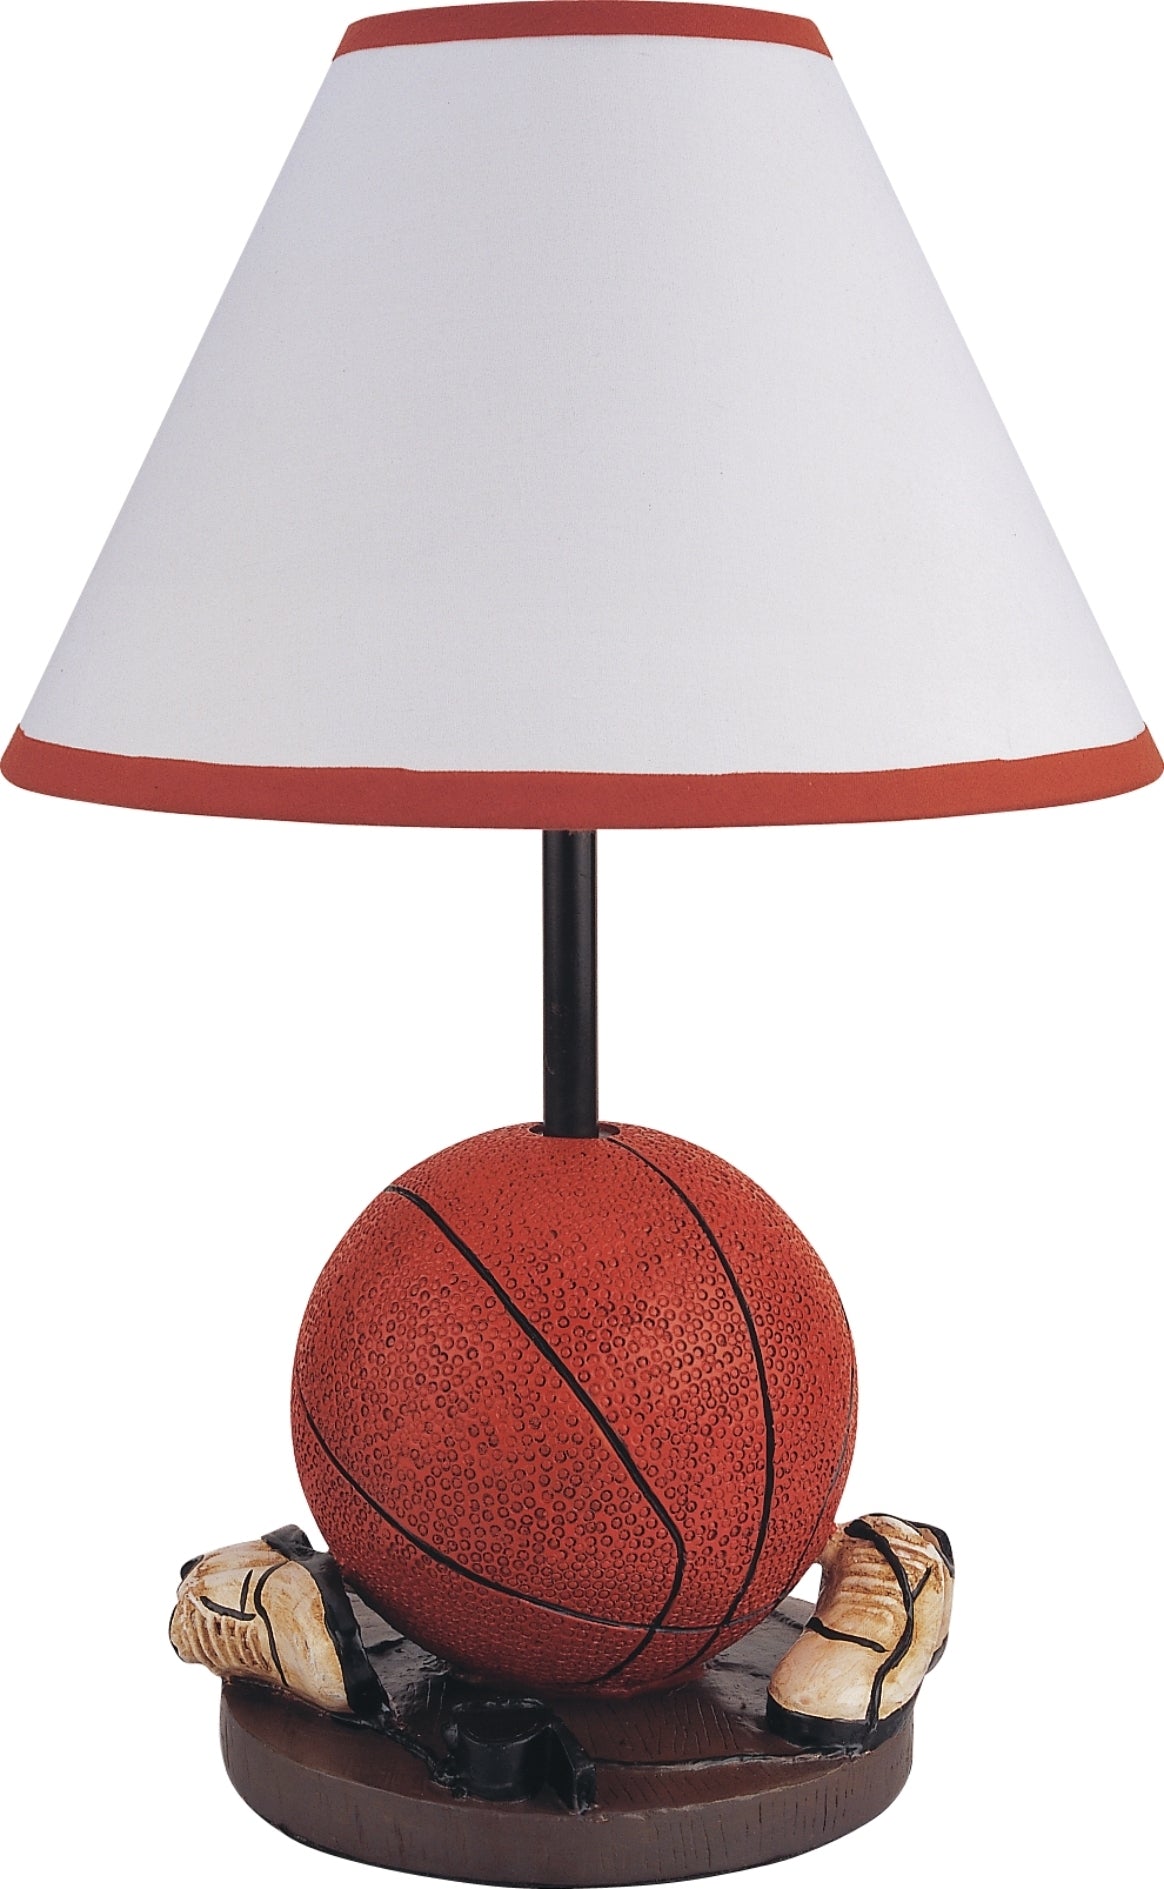 16" Basketball Lamp